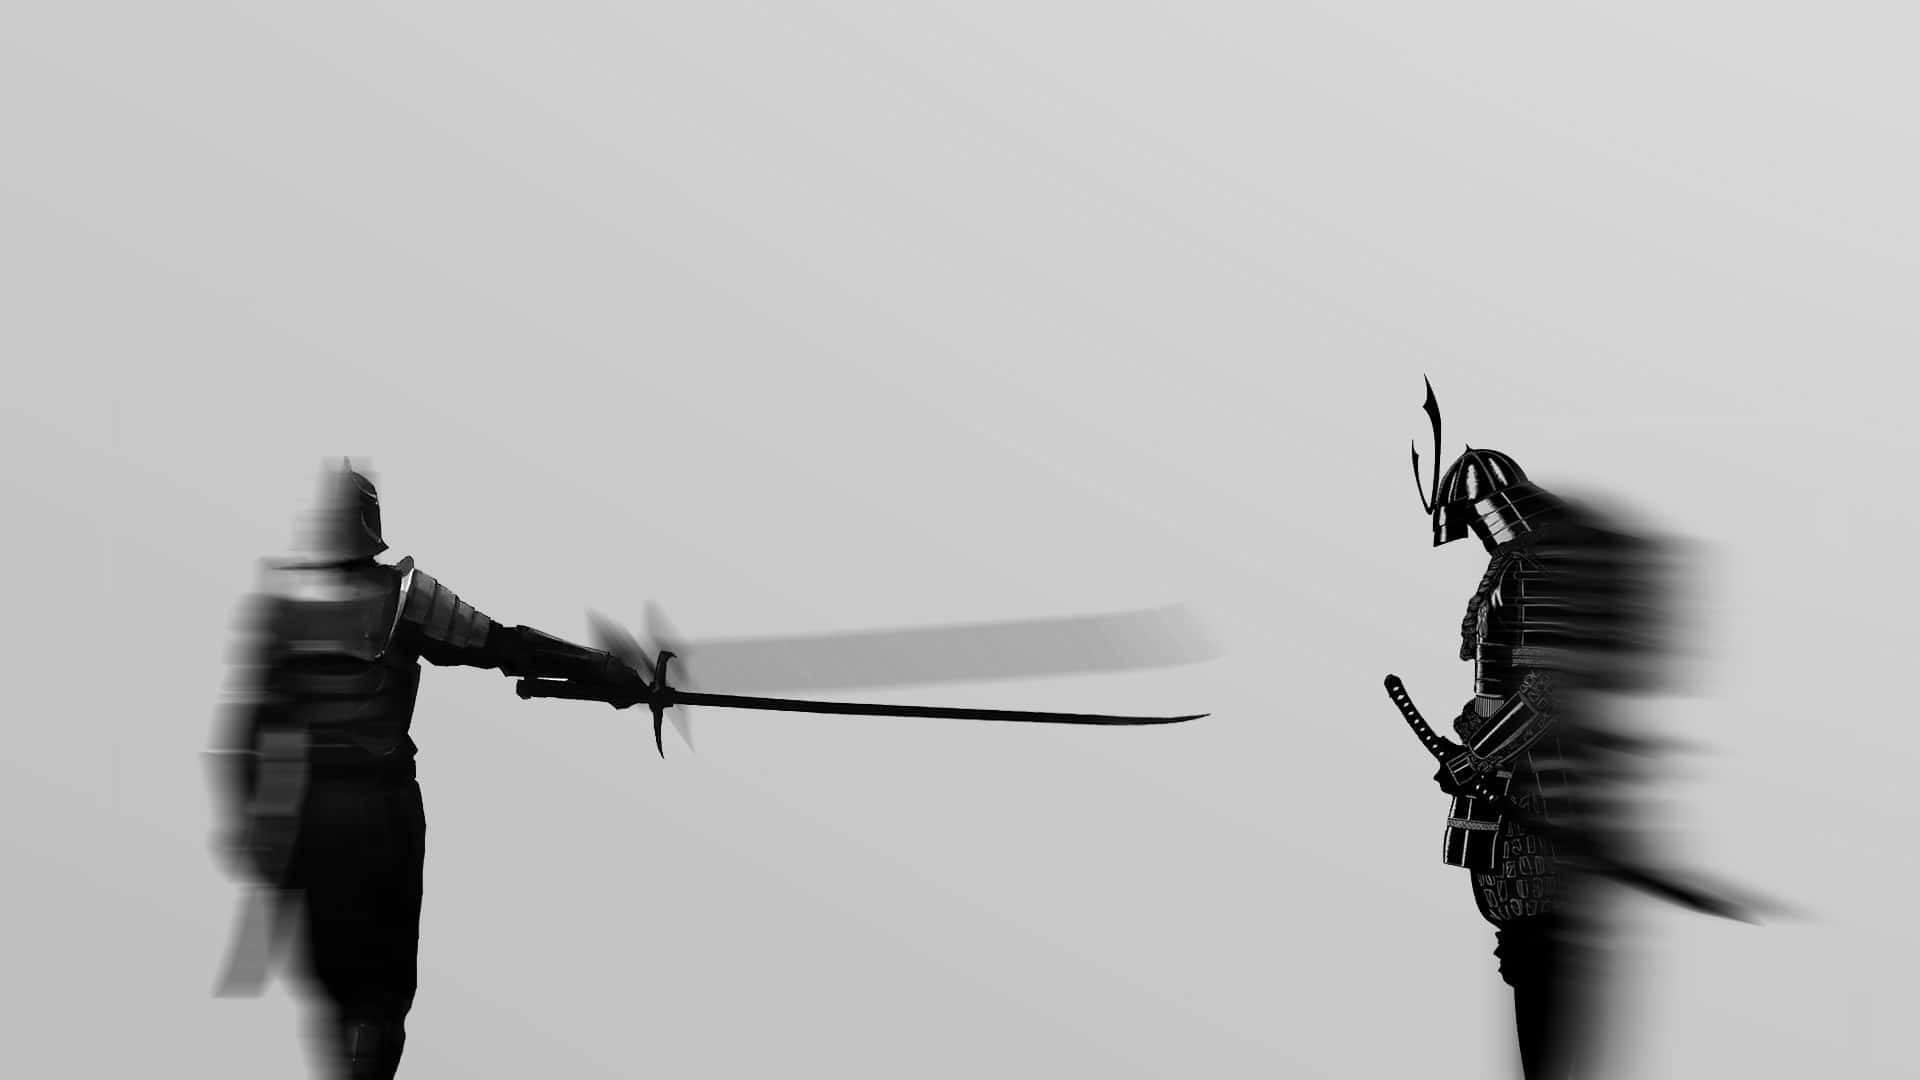 Powerful Samurai Sword on Display Wallpaper